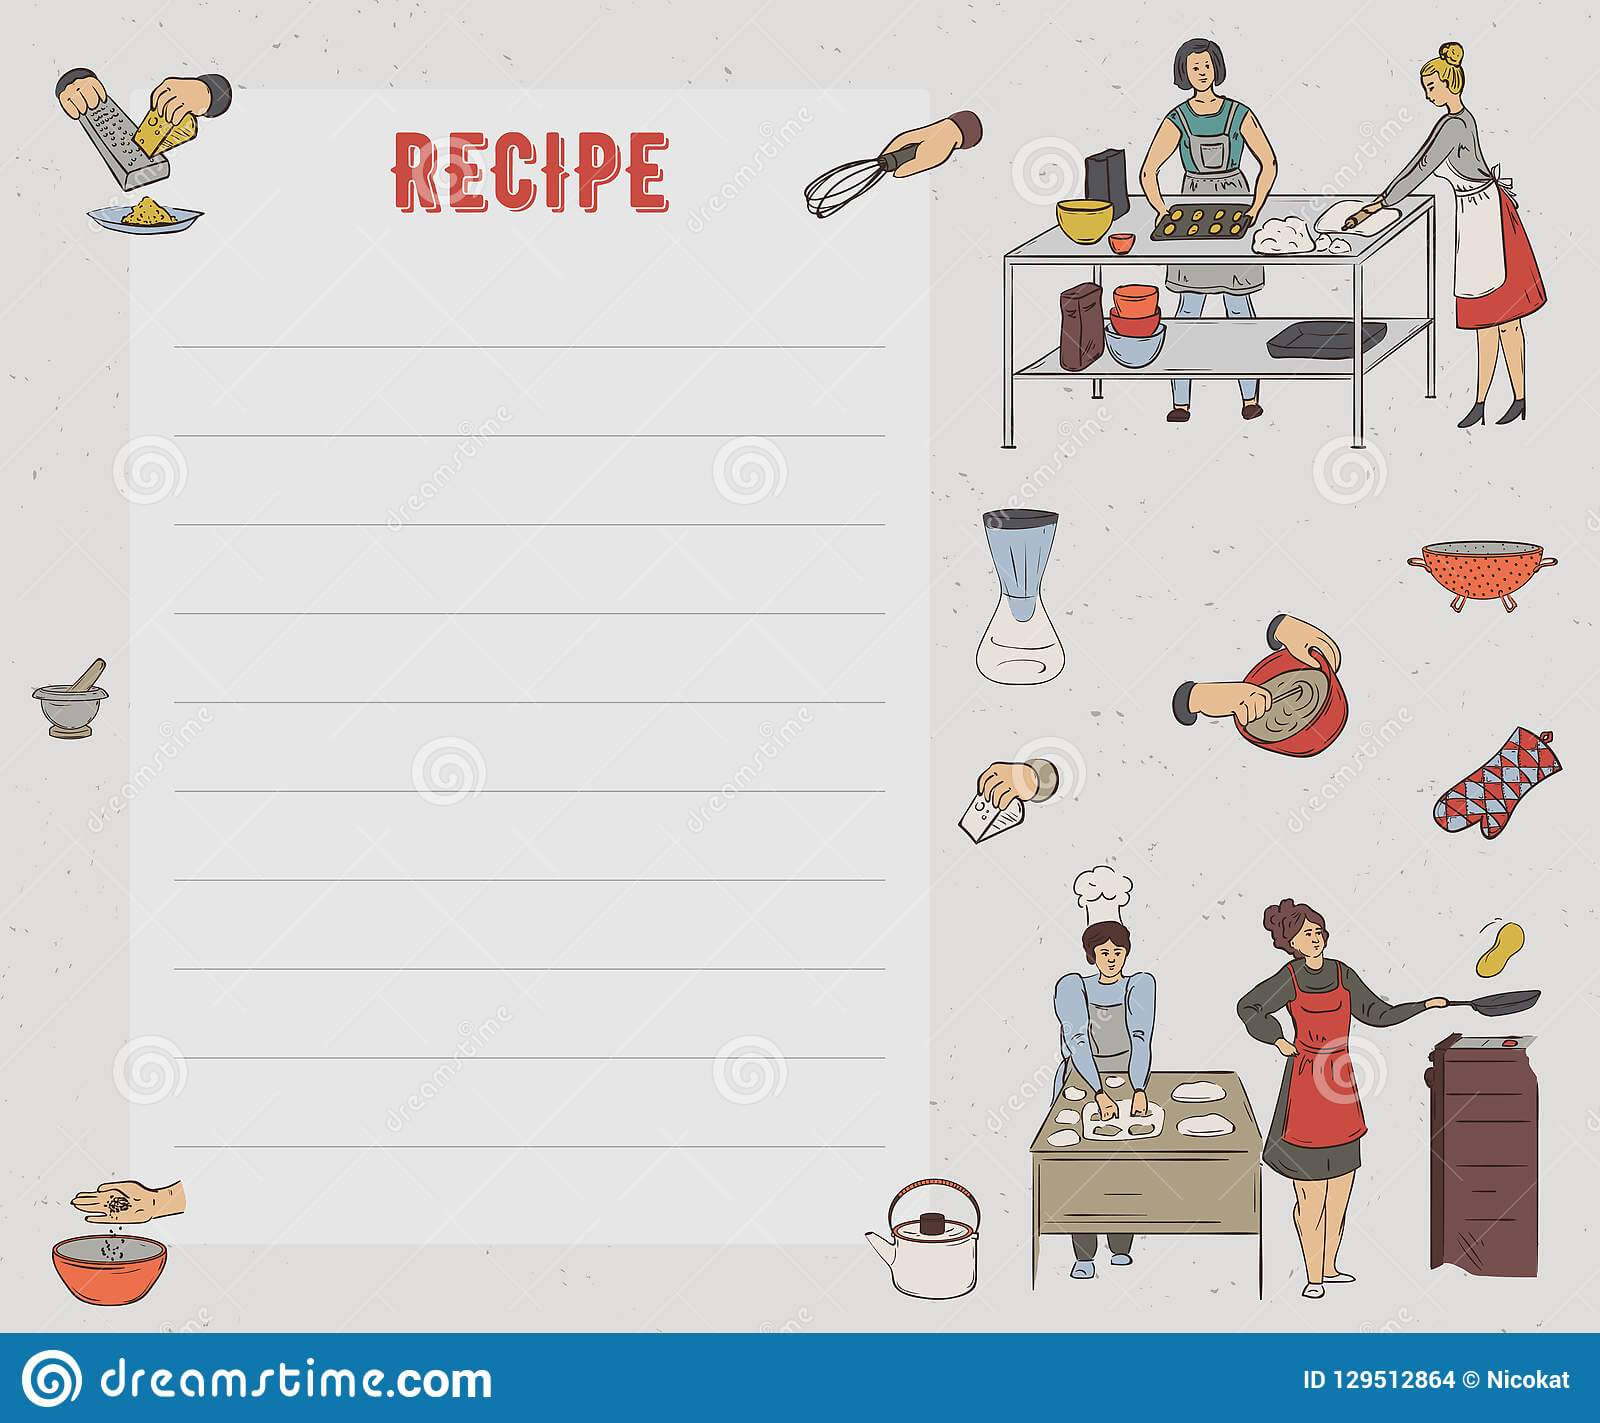 Recipe Card. Cookbook Page. Design Template With People Intended For Recipe Card Design Template